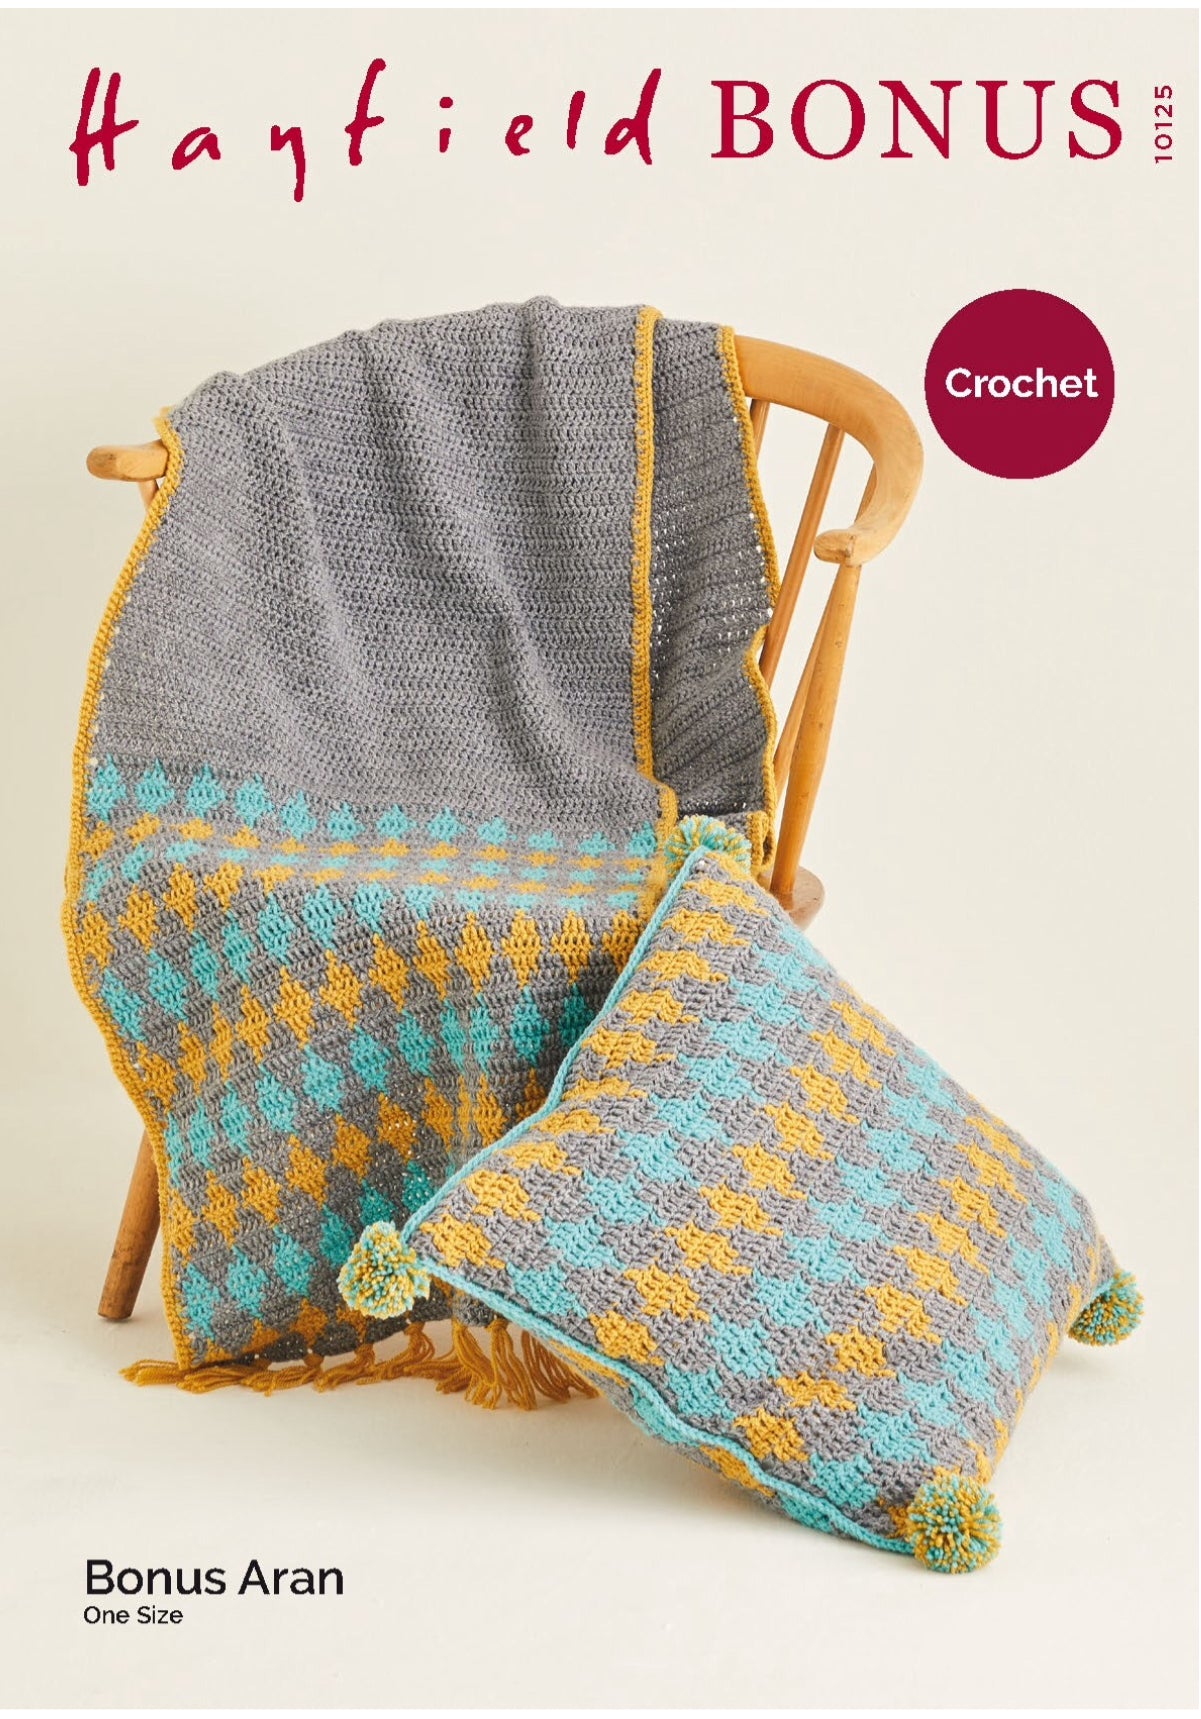 Hayfield Pattern 10125 Crochet Blanket and Cushion in Bonus Aran